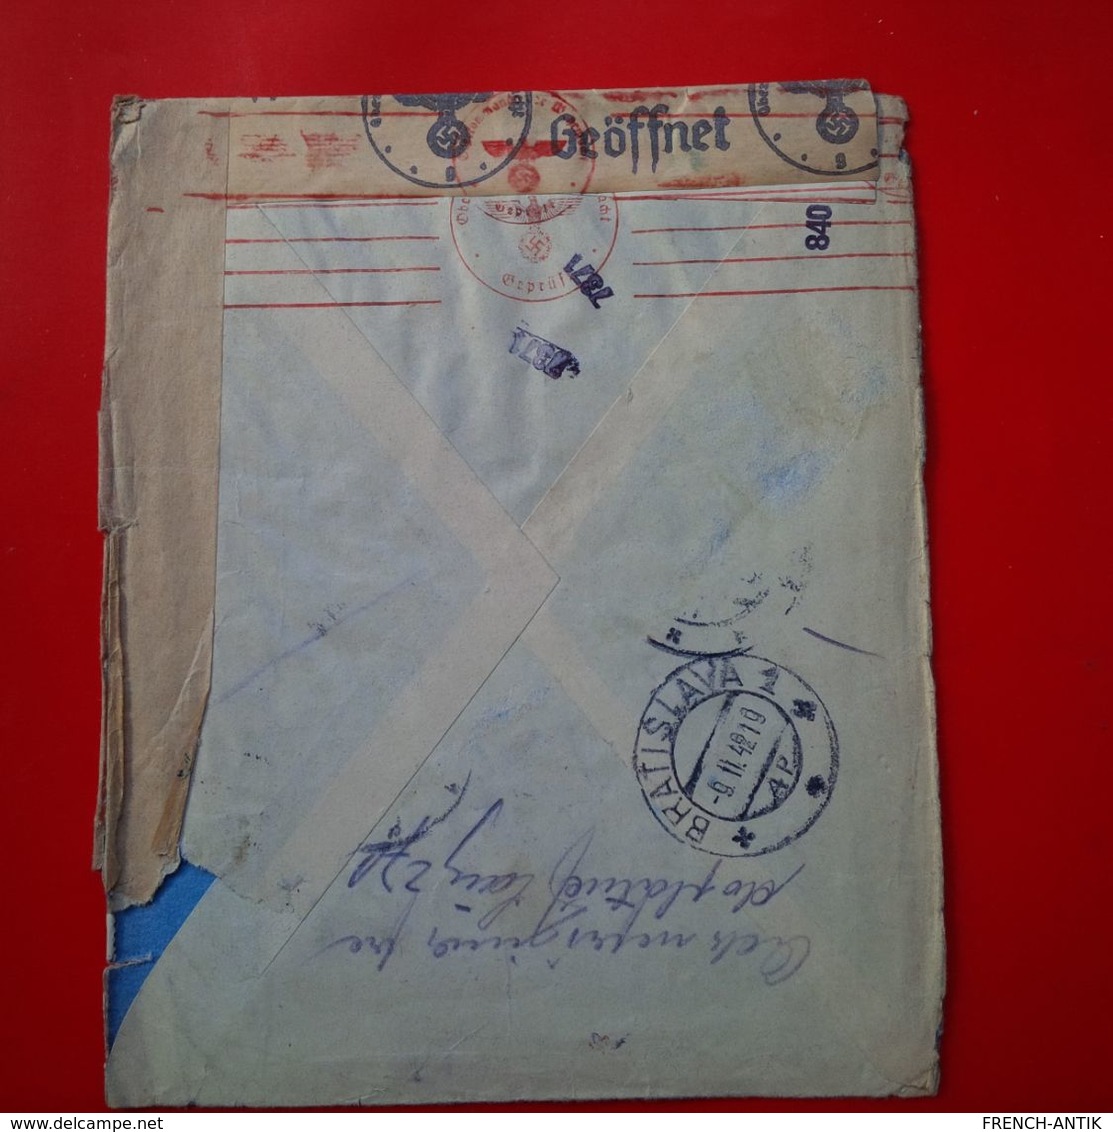 LETTRE DEUTSCHE FELDPOST REICH BRATISLAVA POUR PARIS LIBRAIRIE RIVE GAUCHE 1942 CACHET CENSURE - Cartas & Documentos